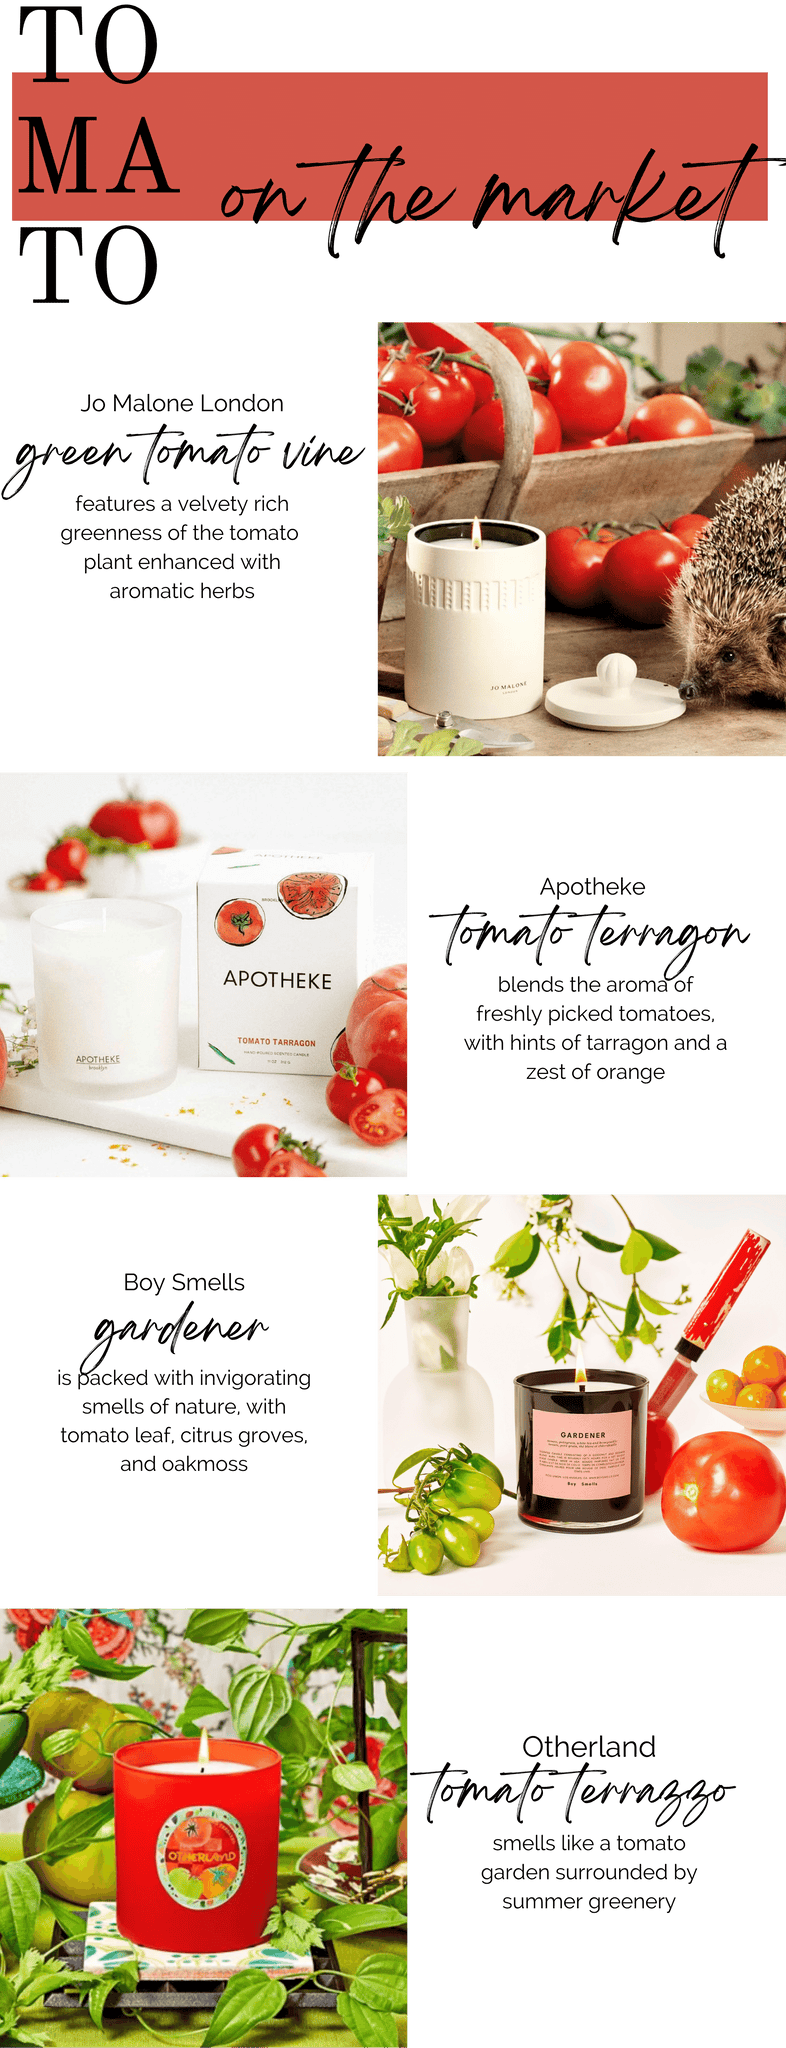 tomato fragrance trend